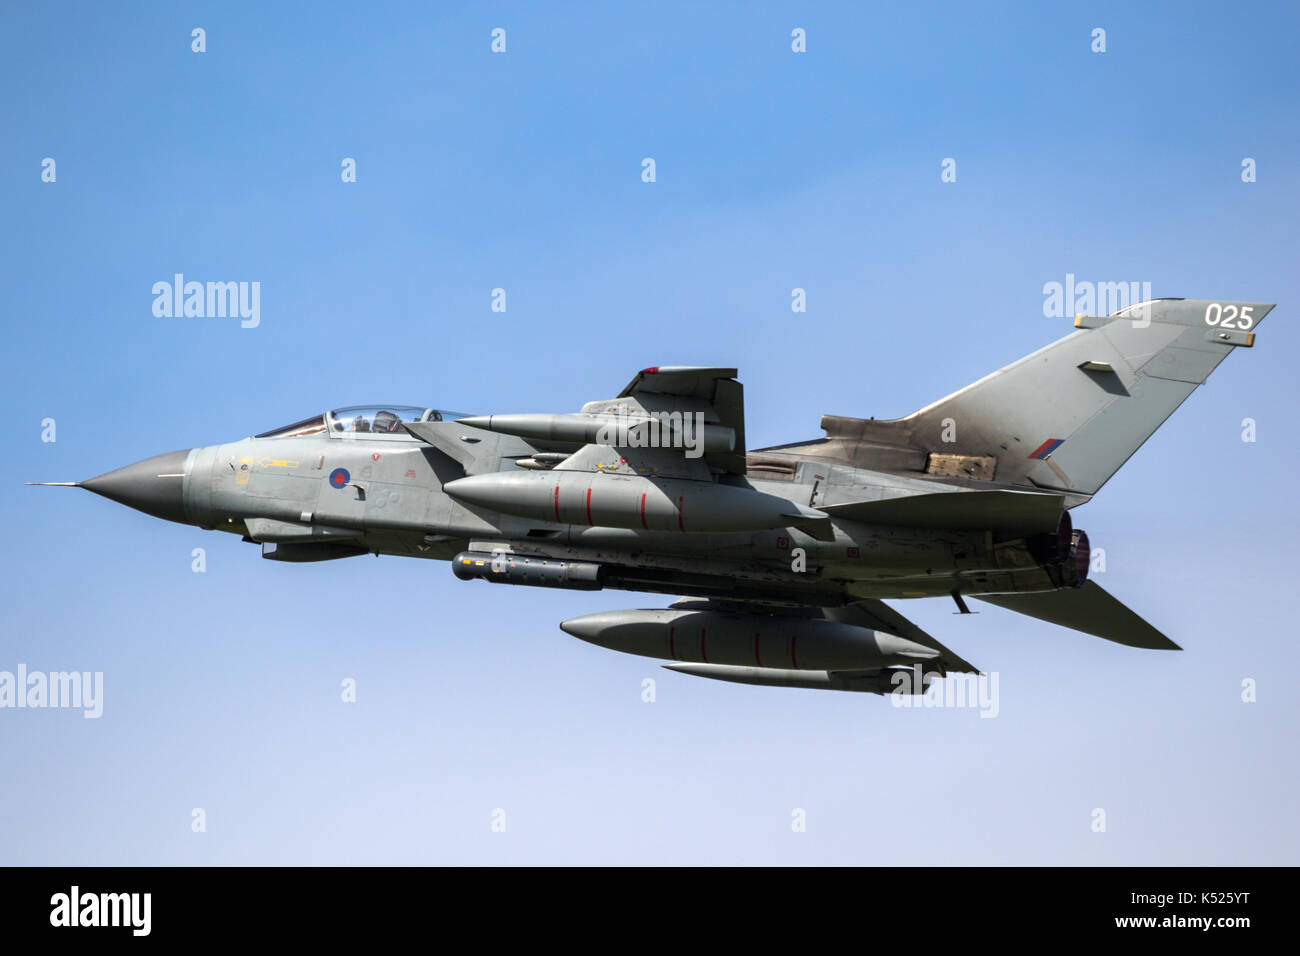 LEEUWARDEN, THE NETHERLANDS - MRT 28, 2017: British Royal Air Force Tornado GR.4 bomber jet plane take off during NATO exercise Frisian Flag. Stock Photo